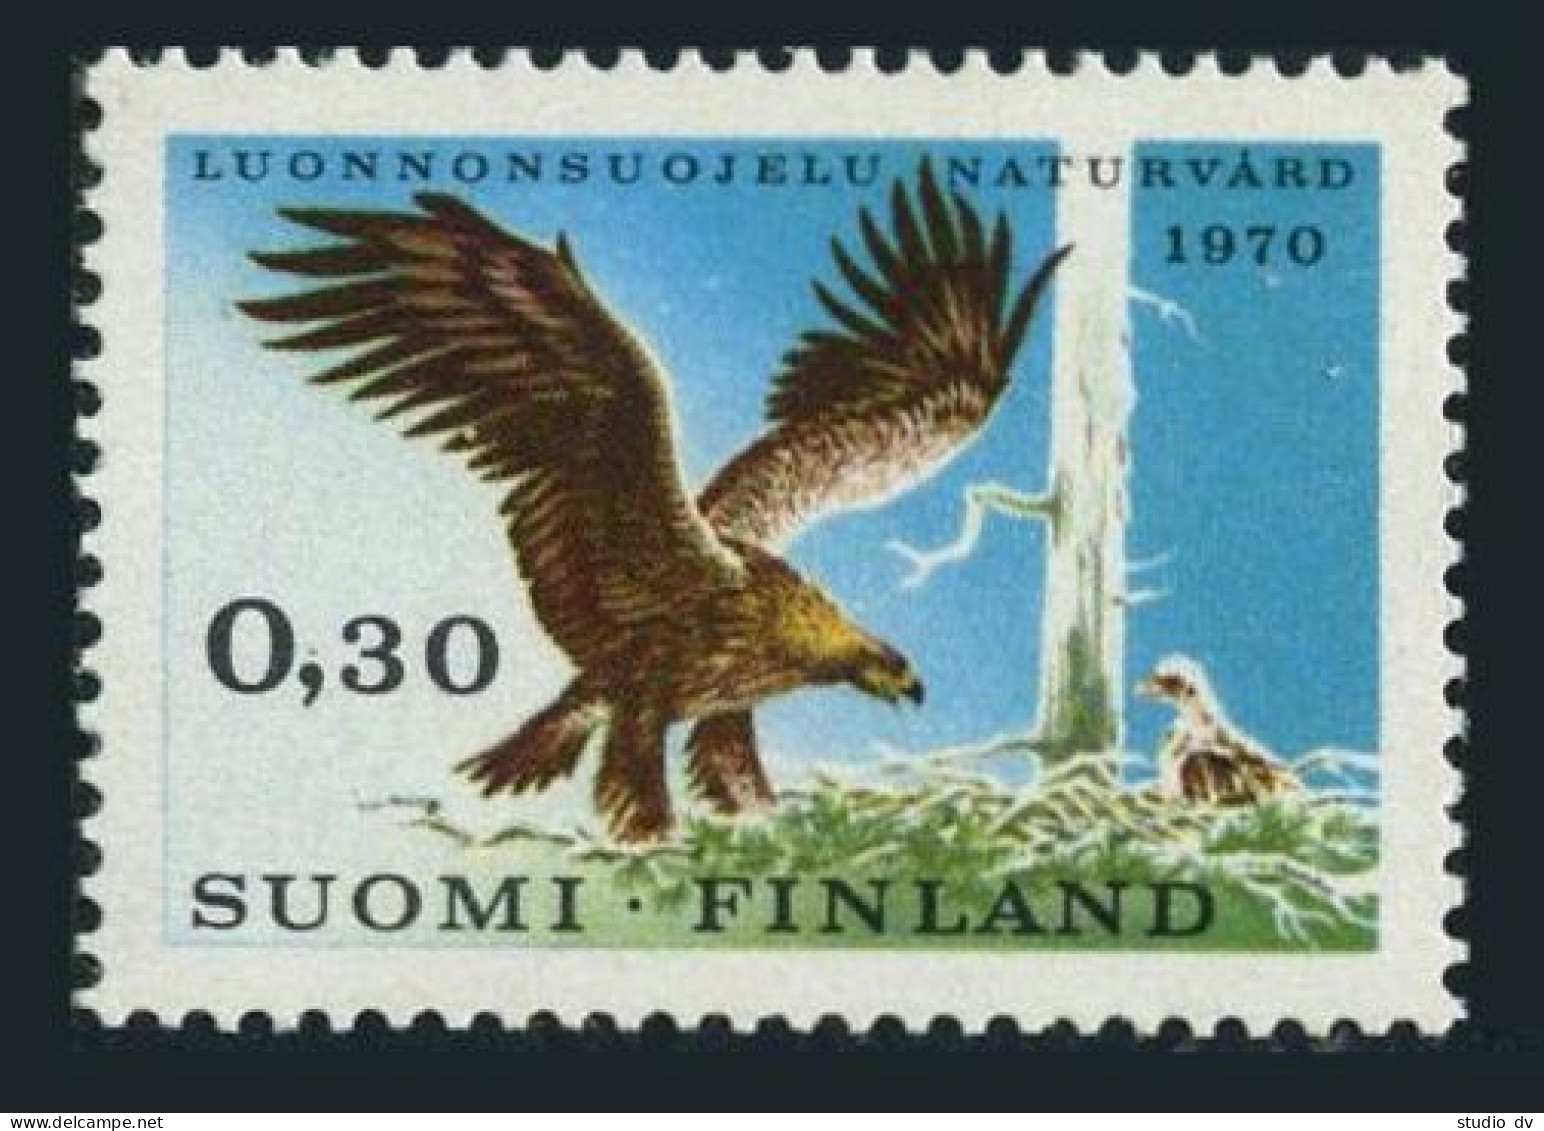 Finland 490, MNH. Michel 667. Nature Conservation 1970. Golden Eagle. - Neufs